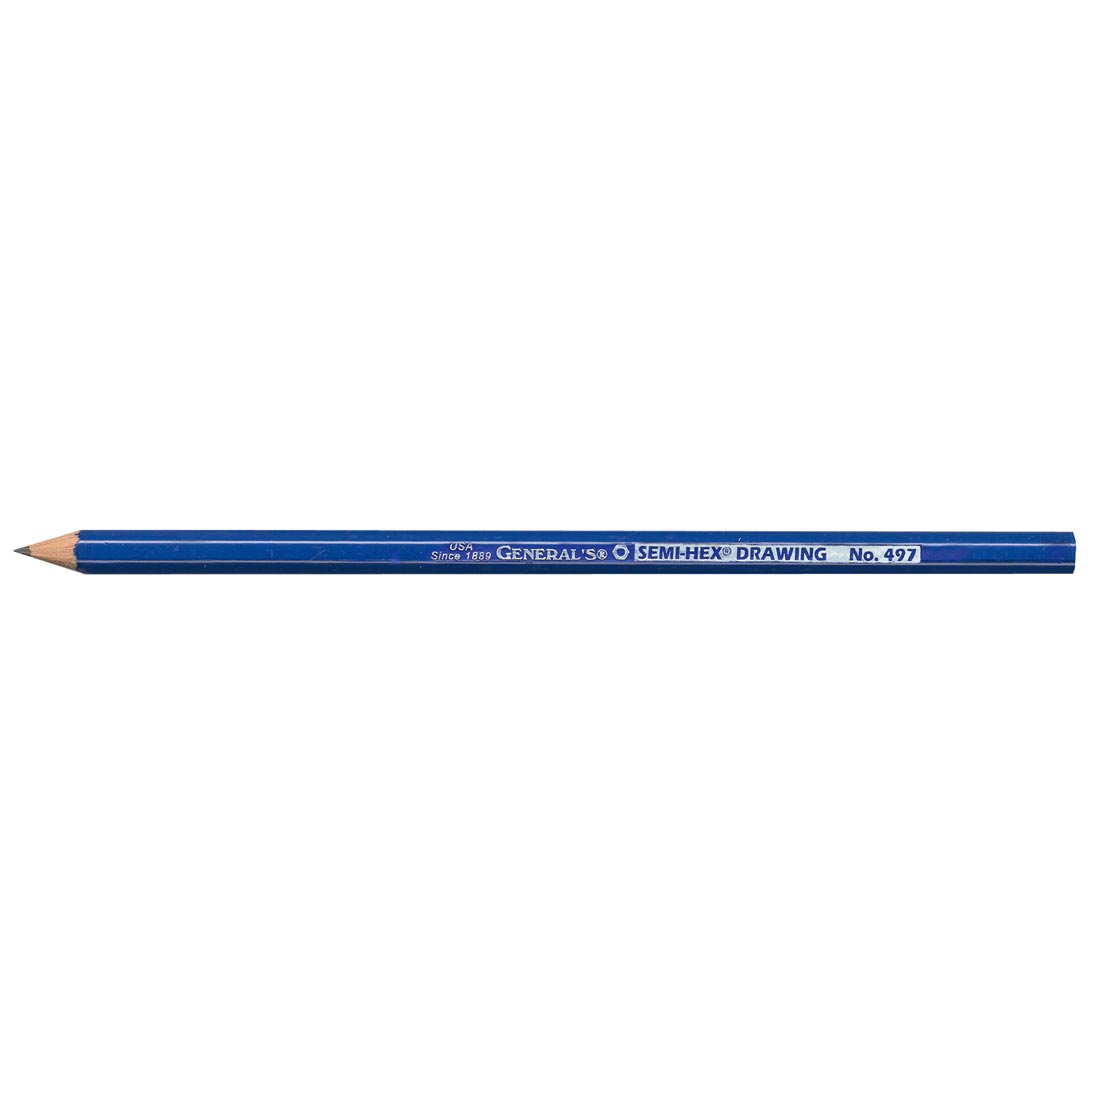 General's Semi-Hex Drawing Pencil HB